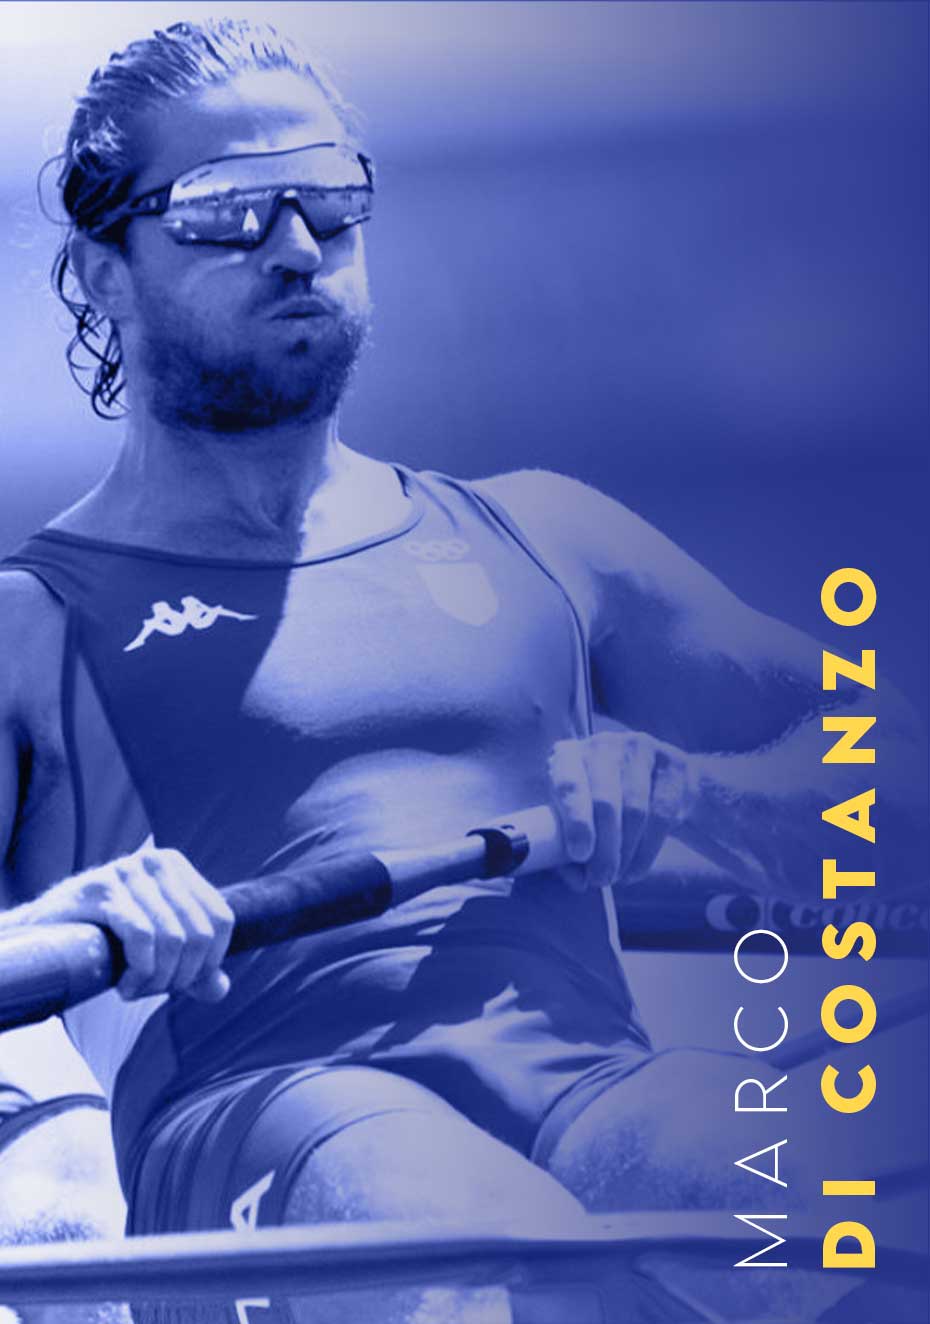 Marco Di Costanzo